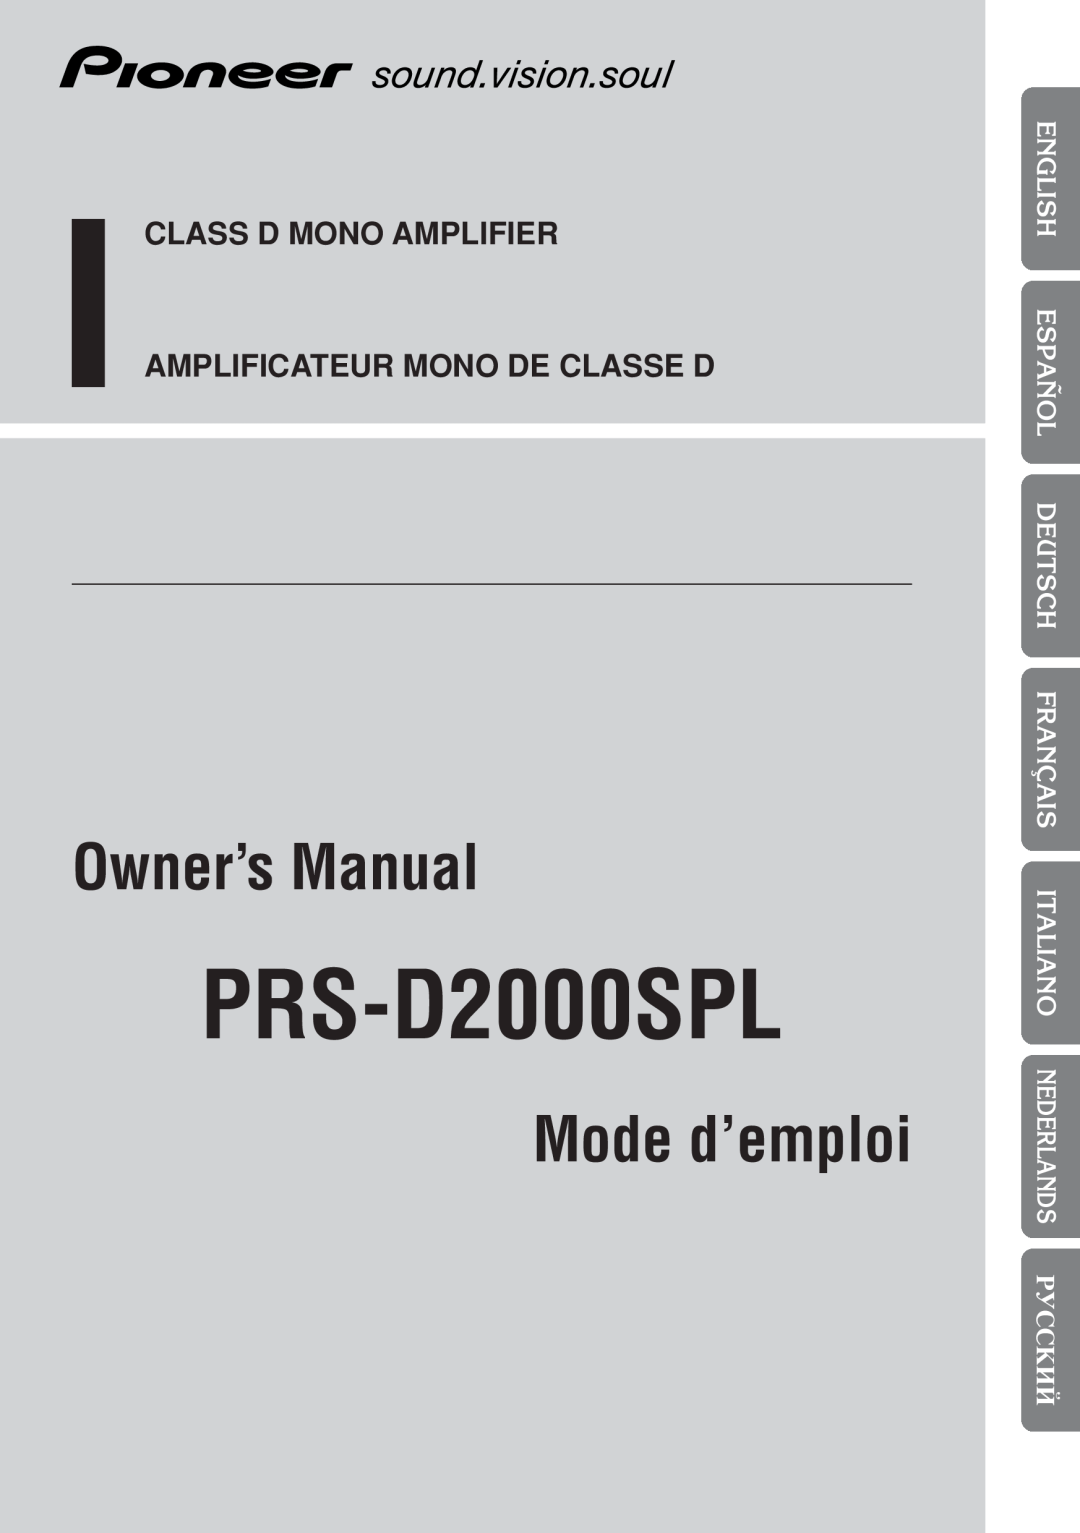 Pioneer owner manual êìëëäàâ, PRS-D2000SPL, Owner’s Manual, Mode d’emploi, Class D Mono Amplifier 